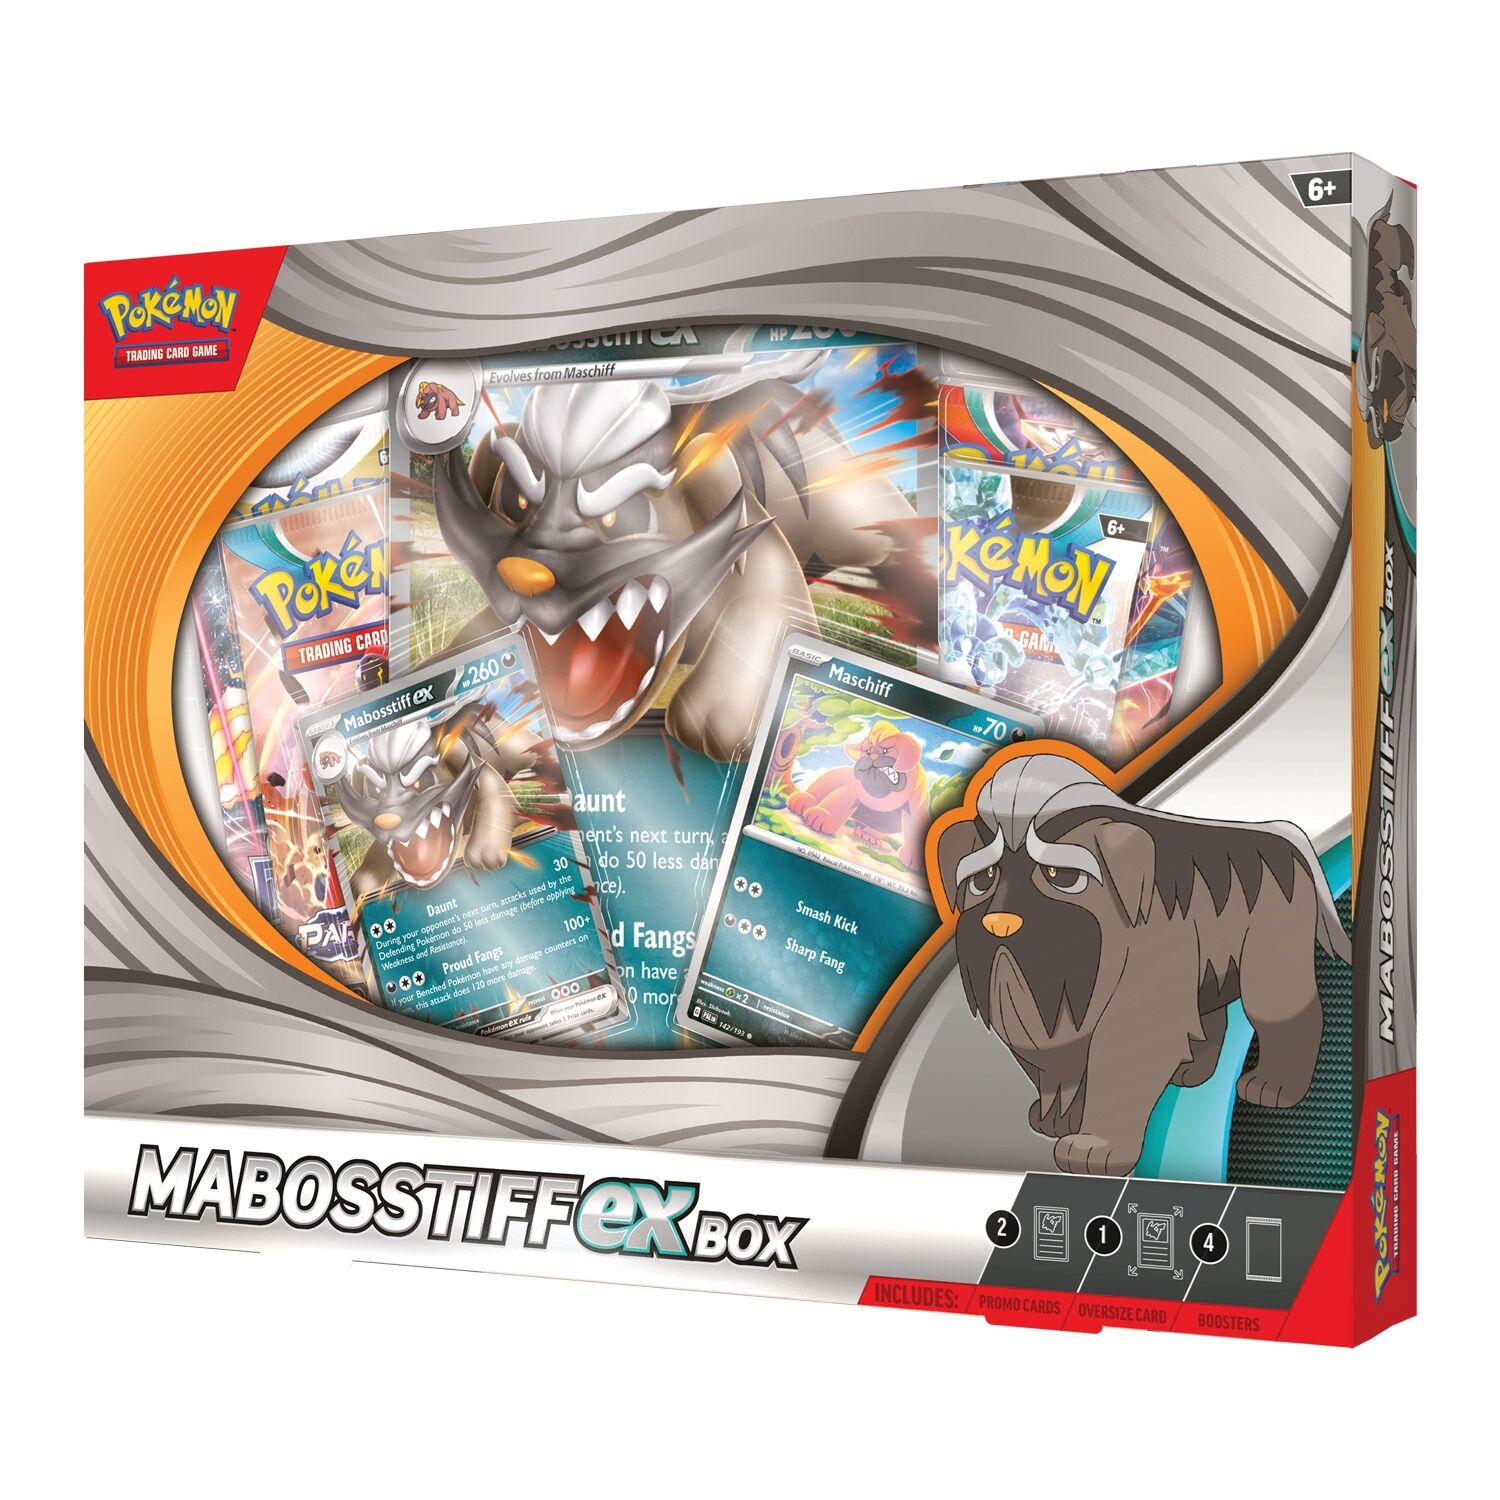 Pokémon TCG: Mabosstiff ex Box - EN